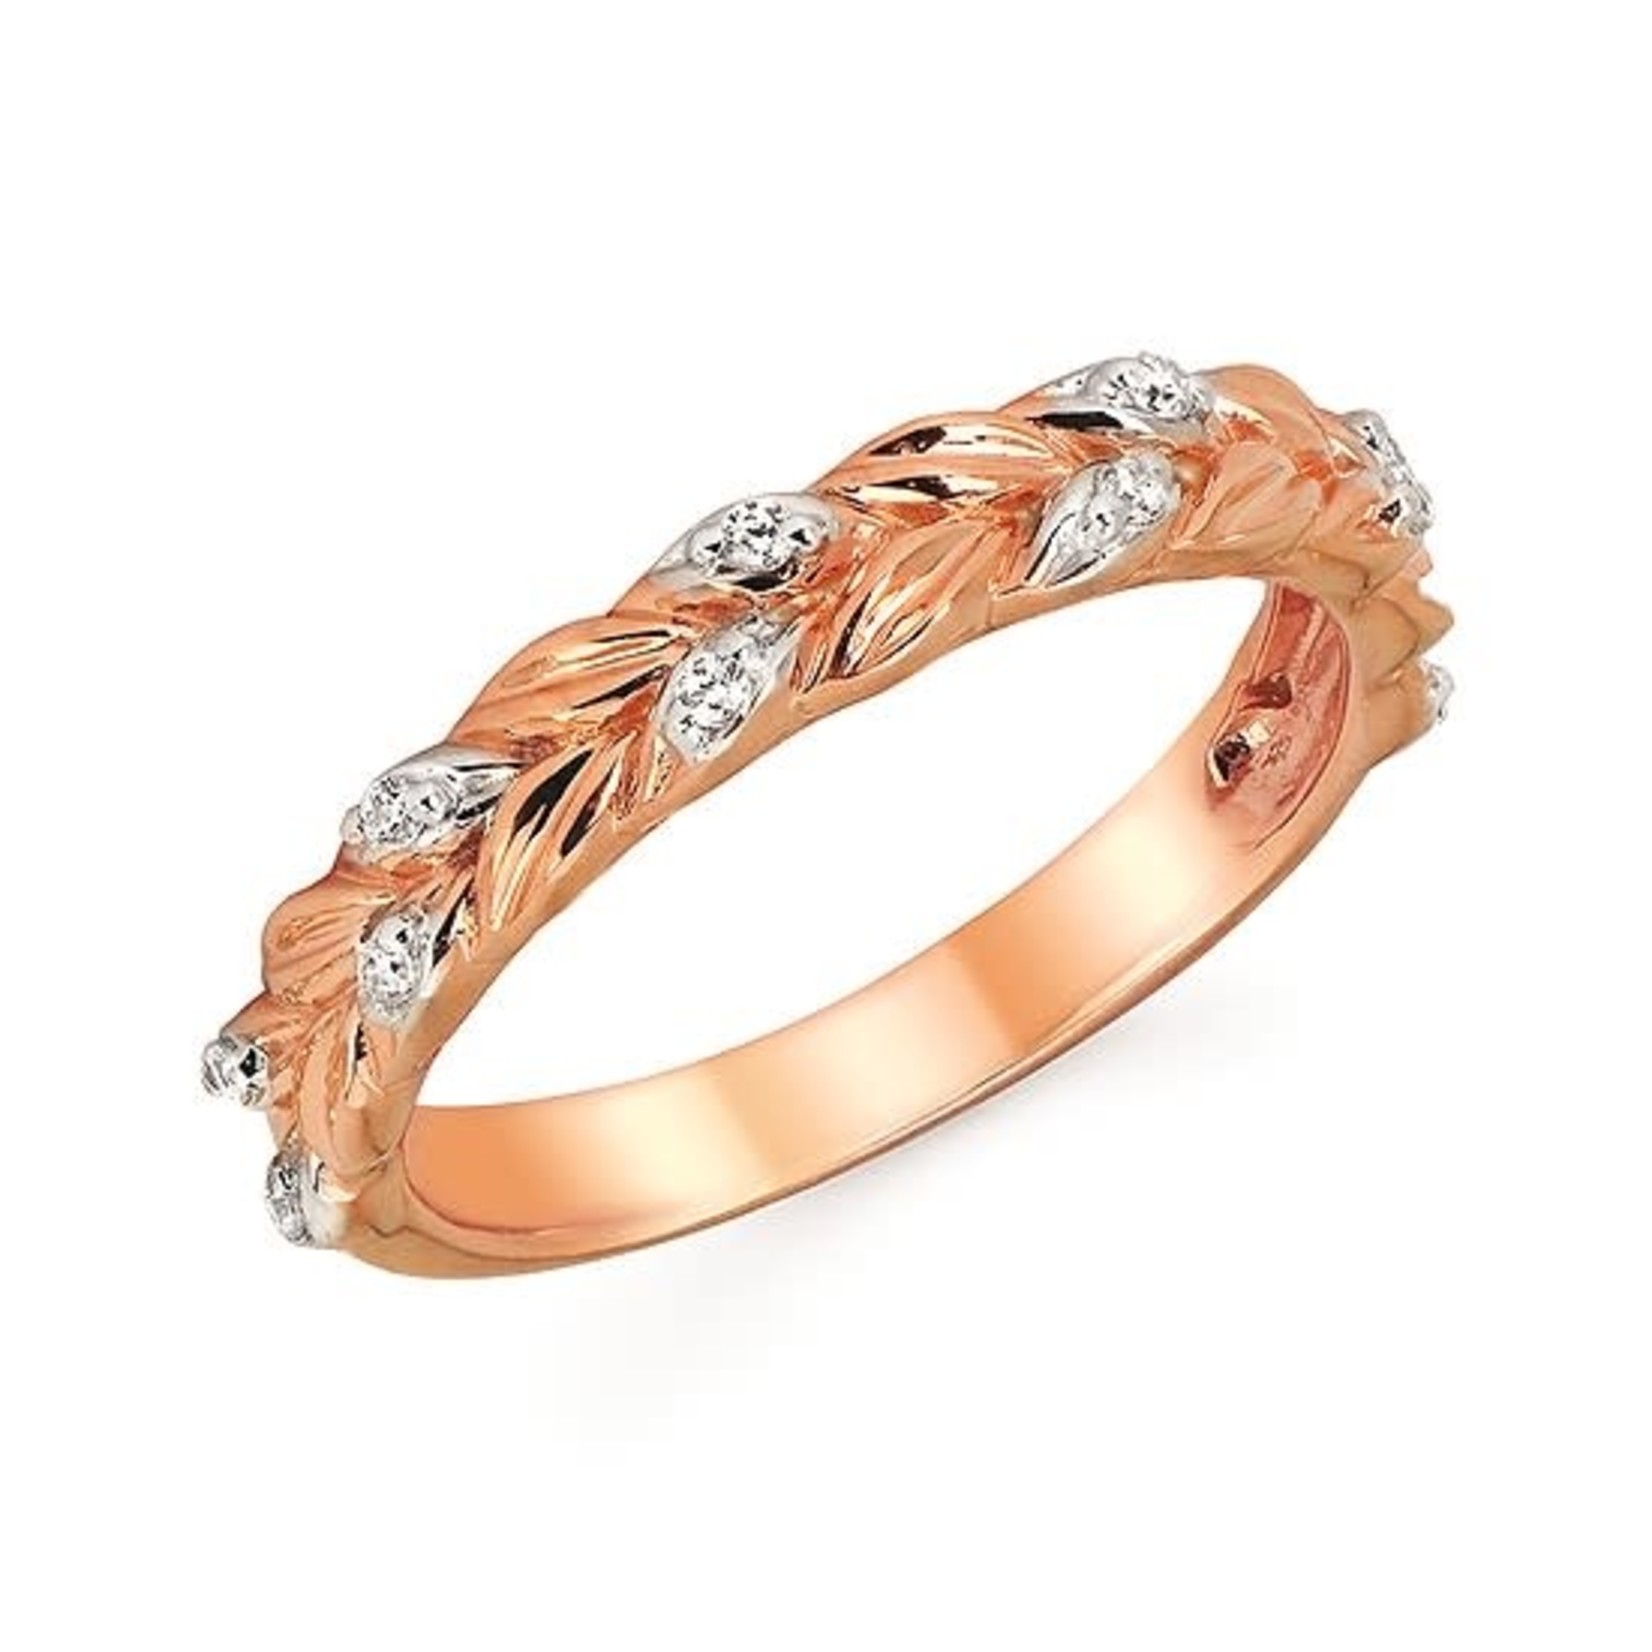 OSTBYE & ANDERSON 14KR Diamond Leaf Fashion Ring 0.08CTTW